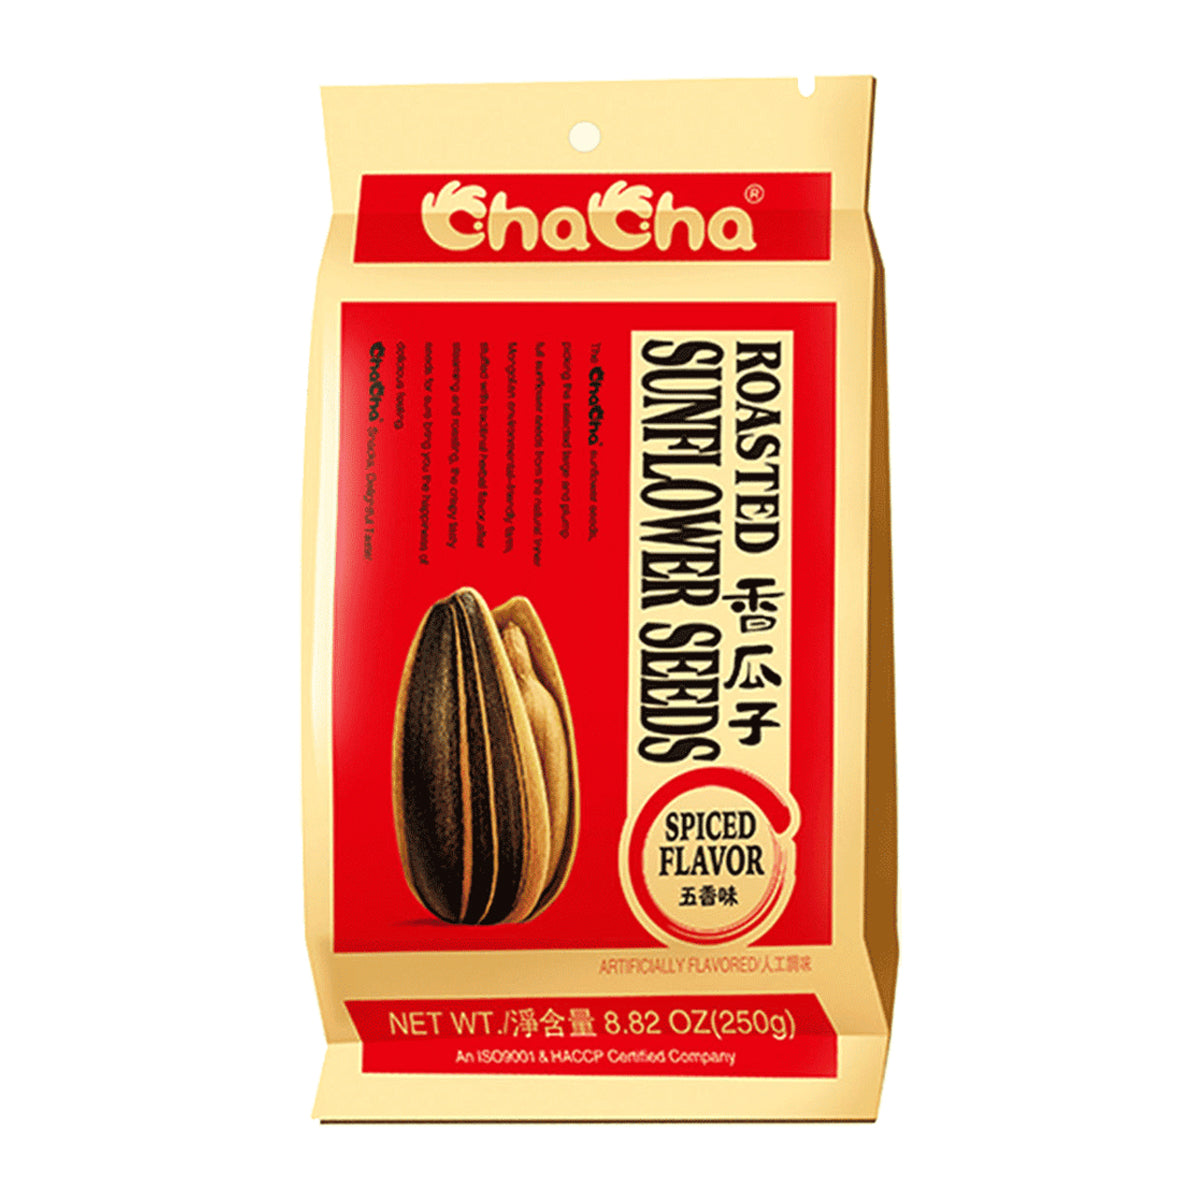 chacha roasted sunflower seeds spiced - 8.82oz